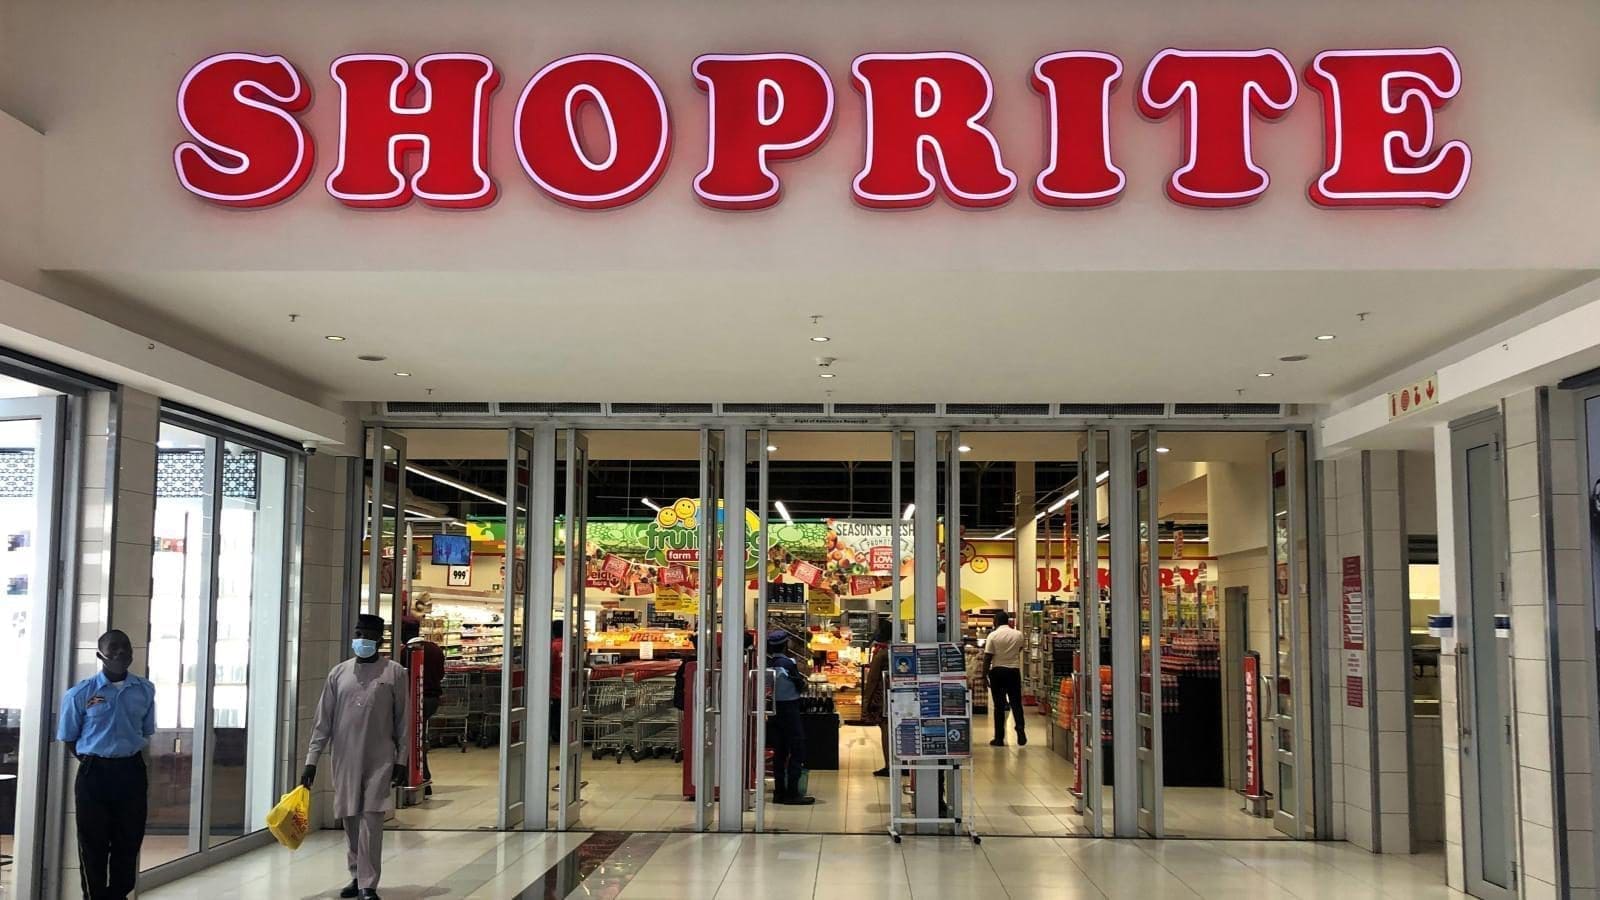 Shoprite’s interim sales attain double digit growth despite riots, liquor sales ban